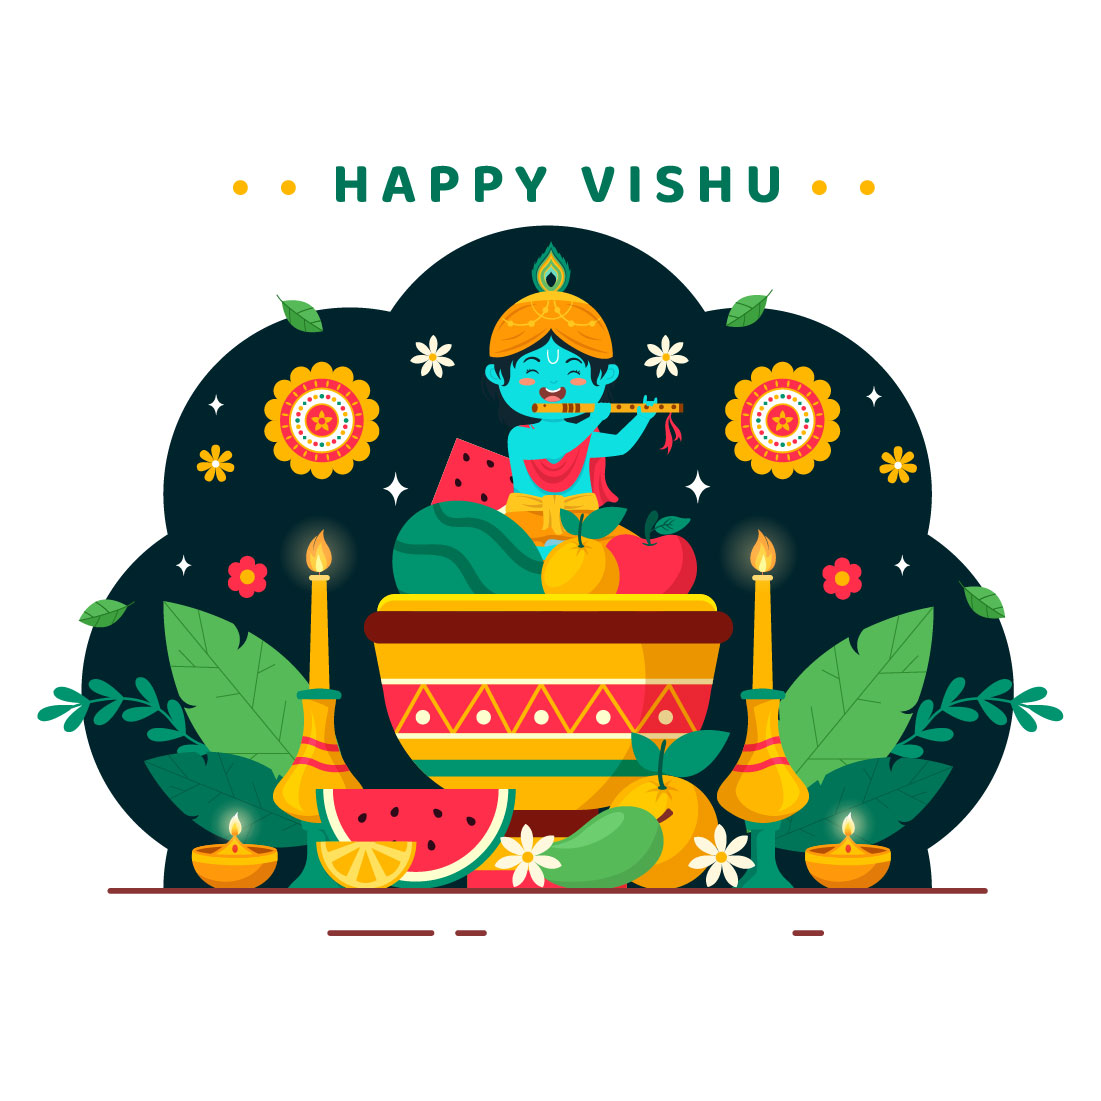 12 Happy Vishu Illustration preview image.